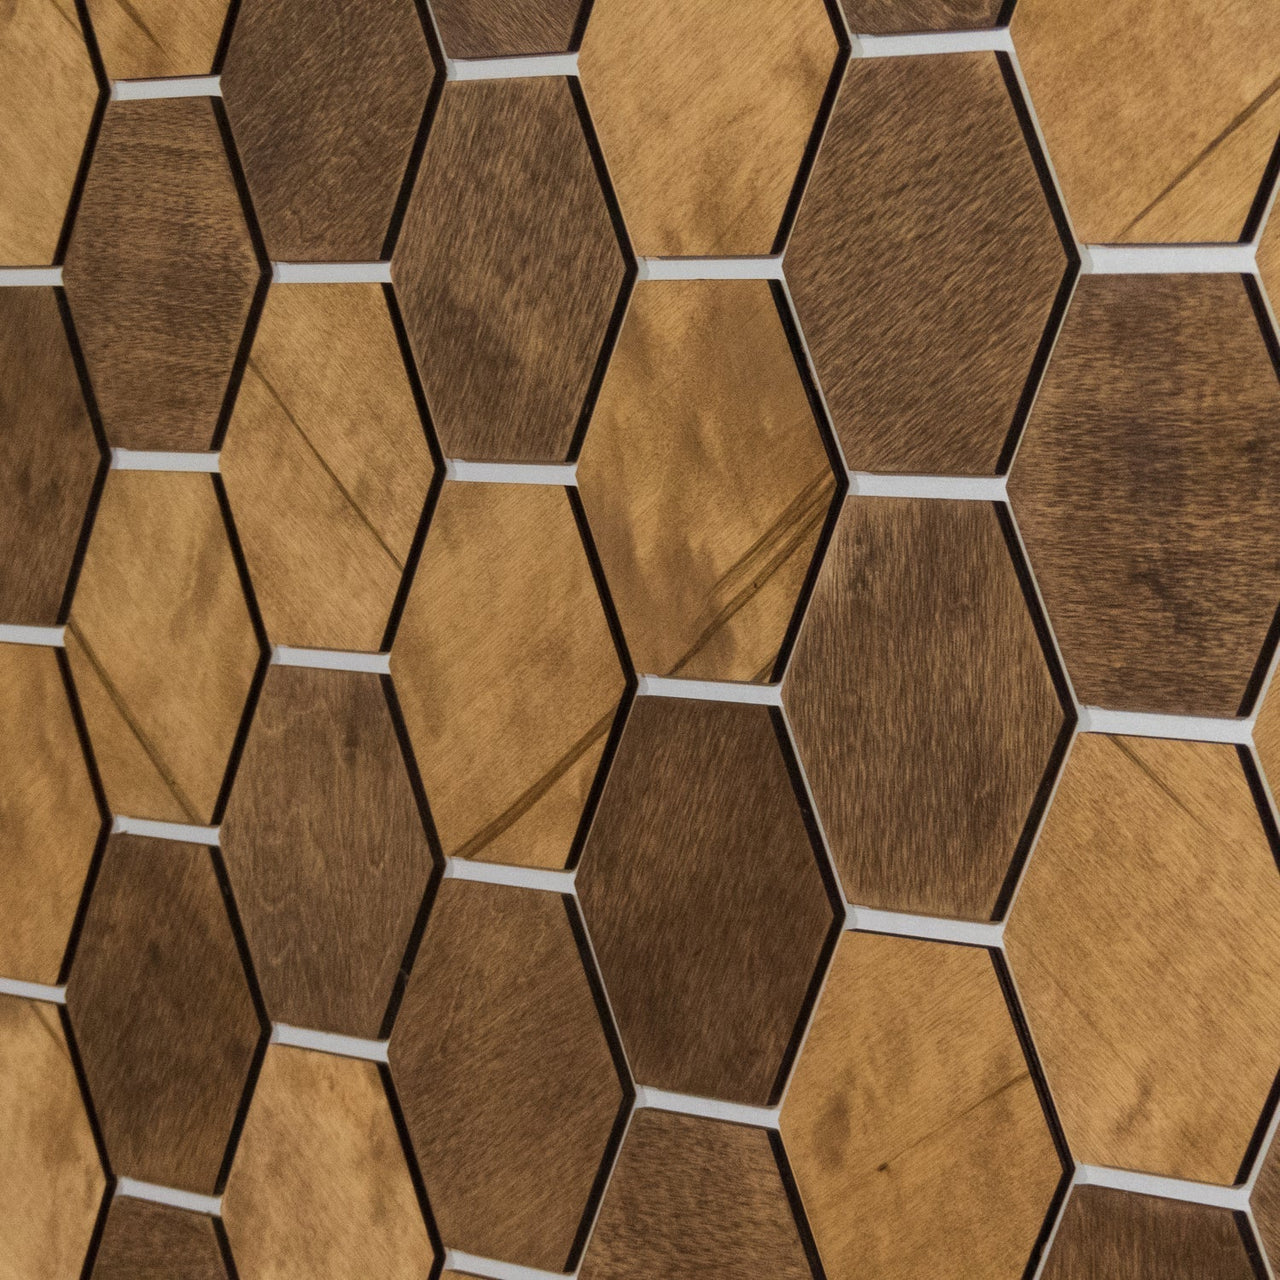 Medium and Dark Hexagon Wooden Wall Panels by Hexagonica